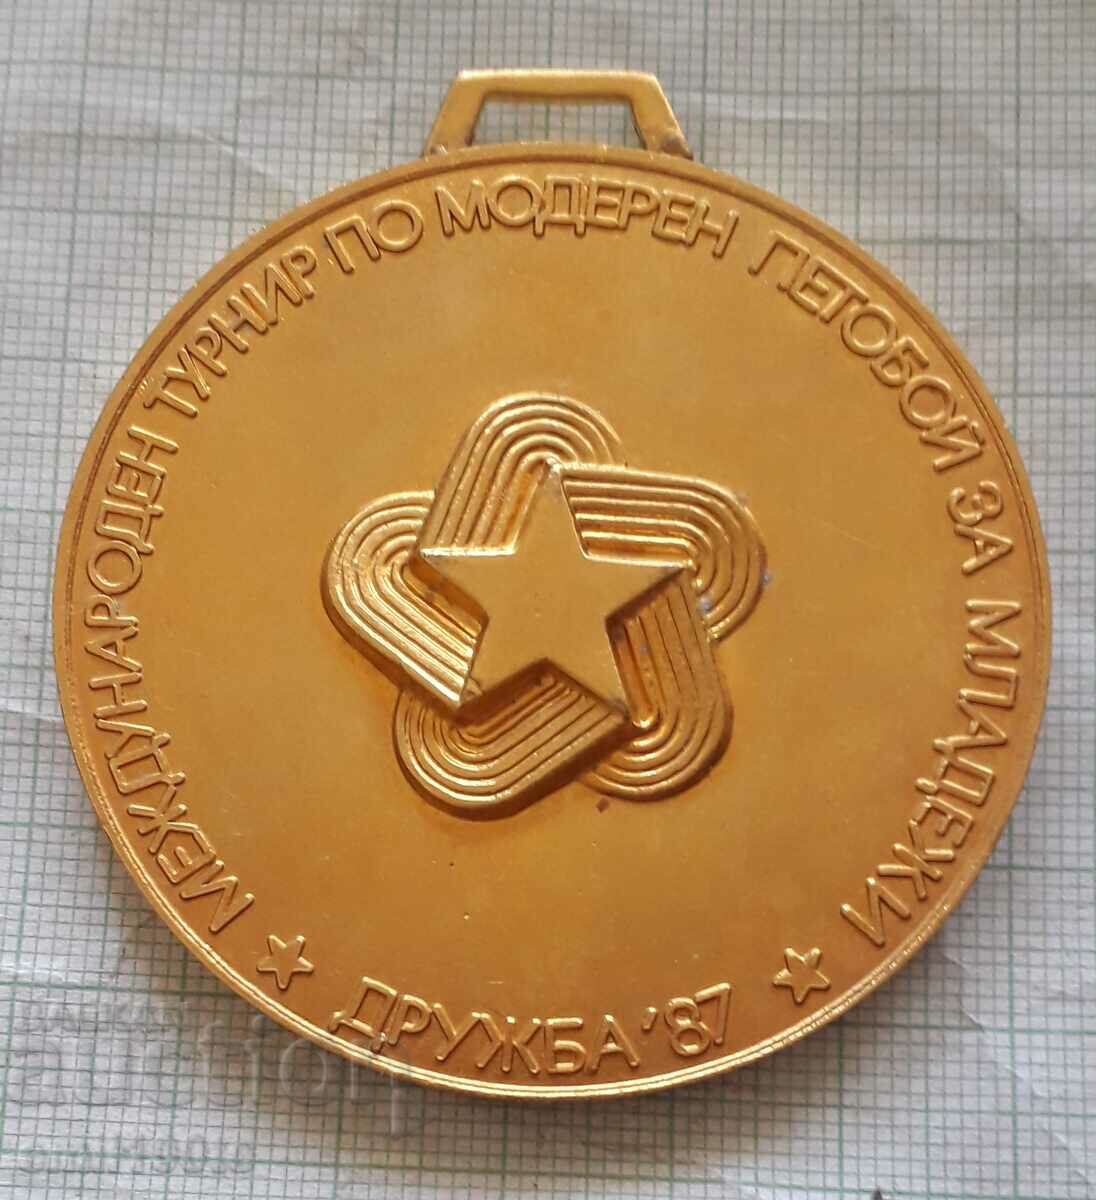 Medalie Turneu internațional de pentathlon modern pentru tineret Druzhba 87